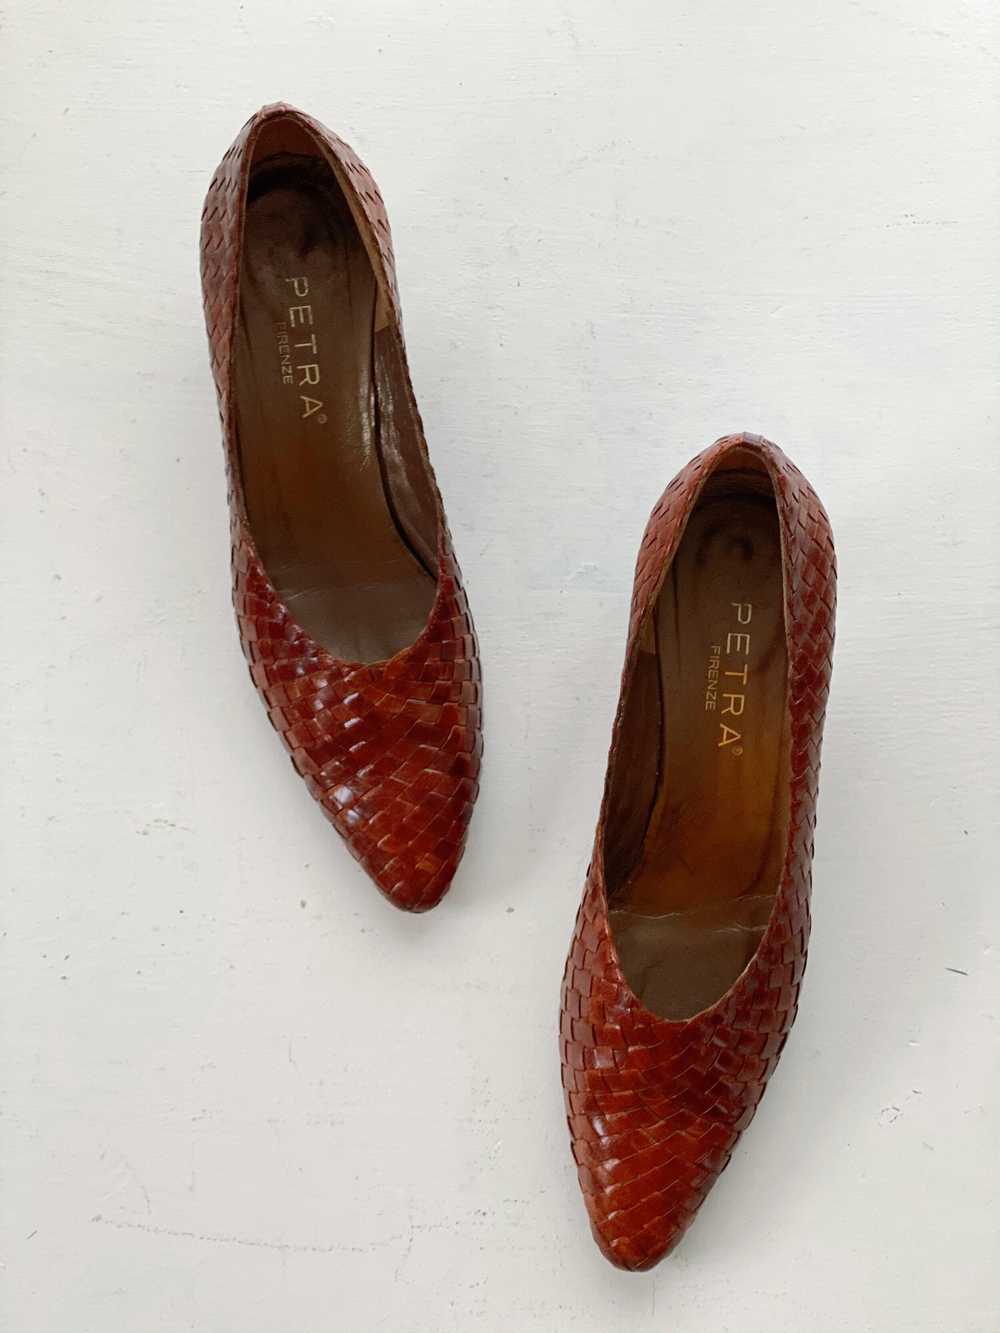 1990s Woven Leather Heels - image 2